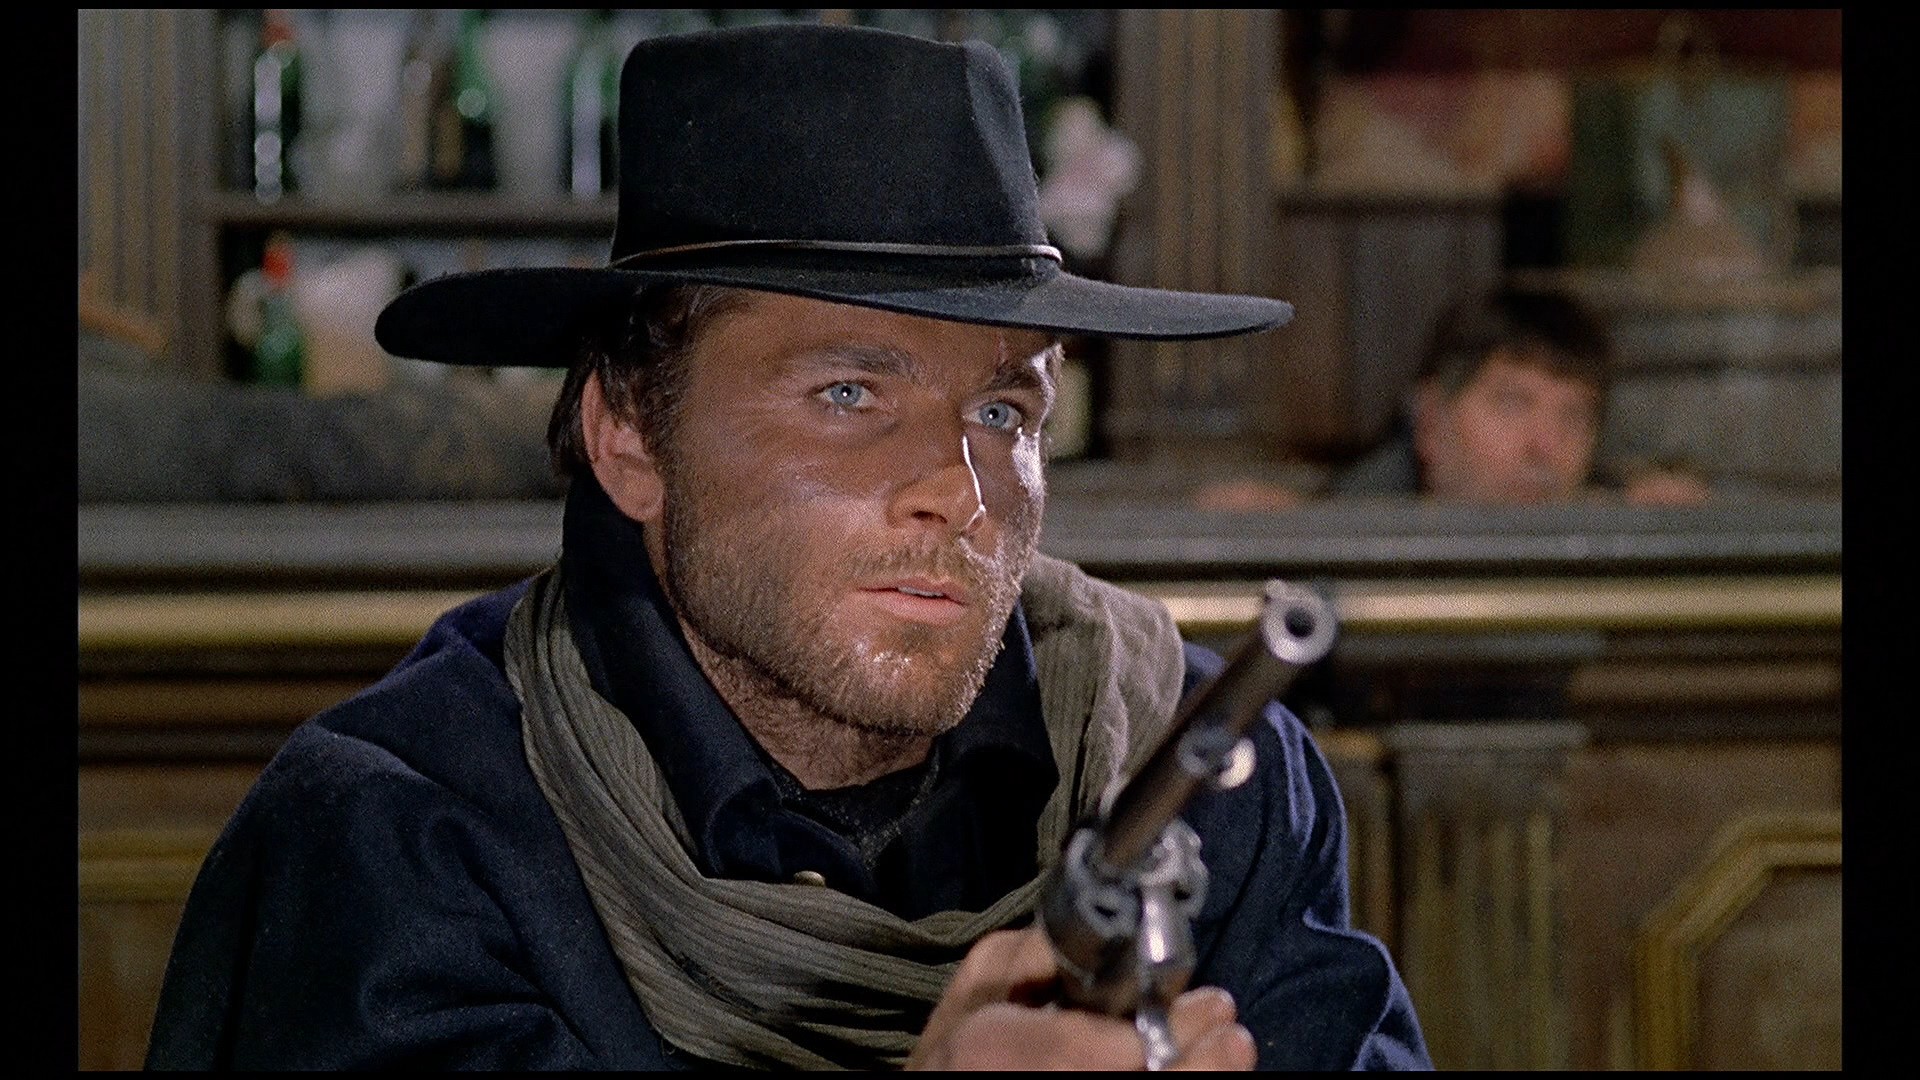 People 1920x1080 movies western Django Unchained film stills weapon revolver hat men